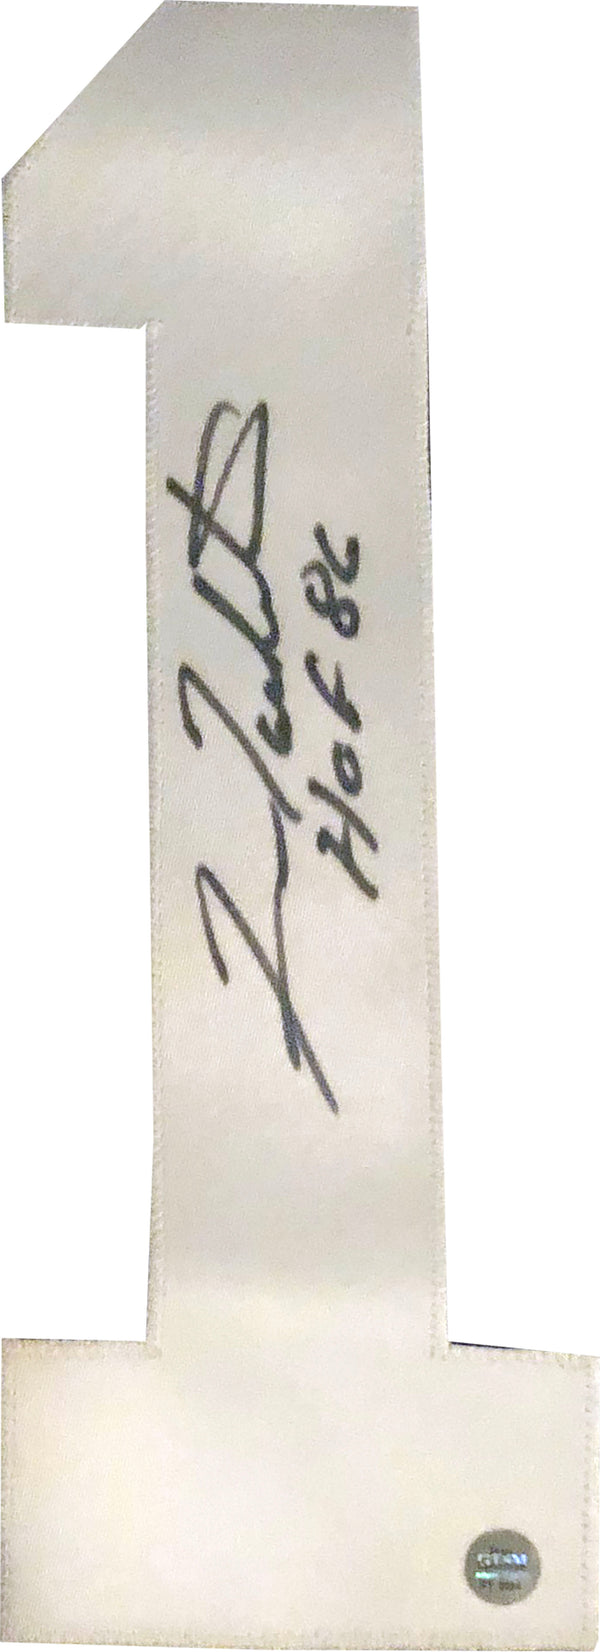 Fran Tarkenton "HOF 86" Autographed Minnesota Vikings Jersey (JSA)